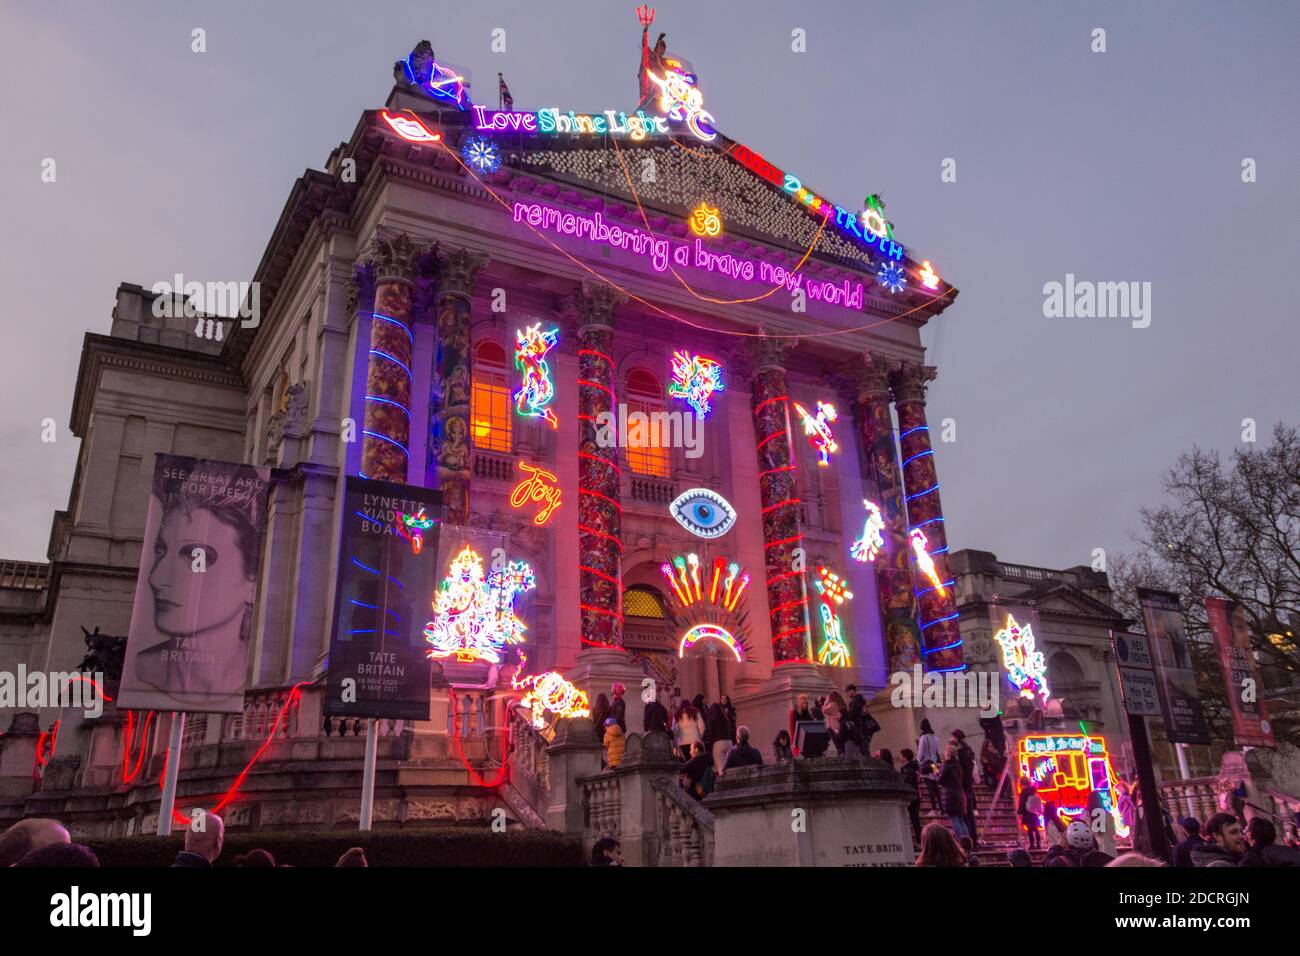 Chila Kumari Singh Burman's Remembering a Brave New World neon lights and swirling colour installation at Tate Britain, London, England, UK Stock Photo